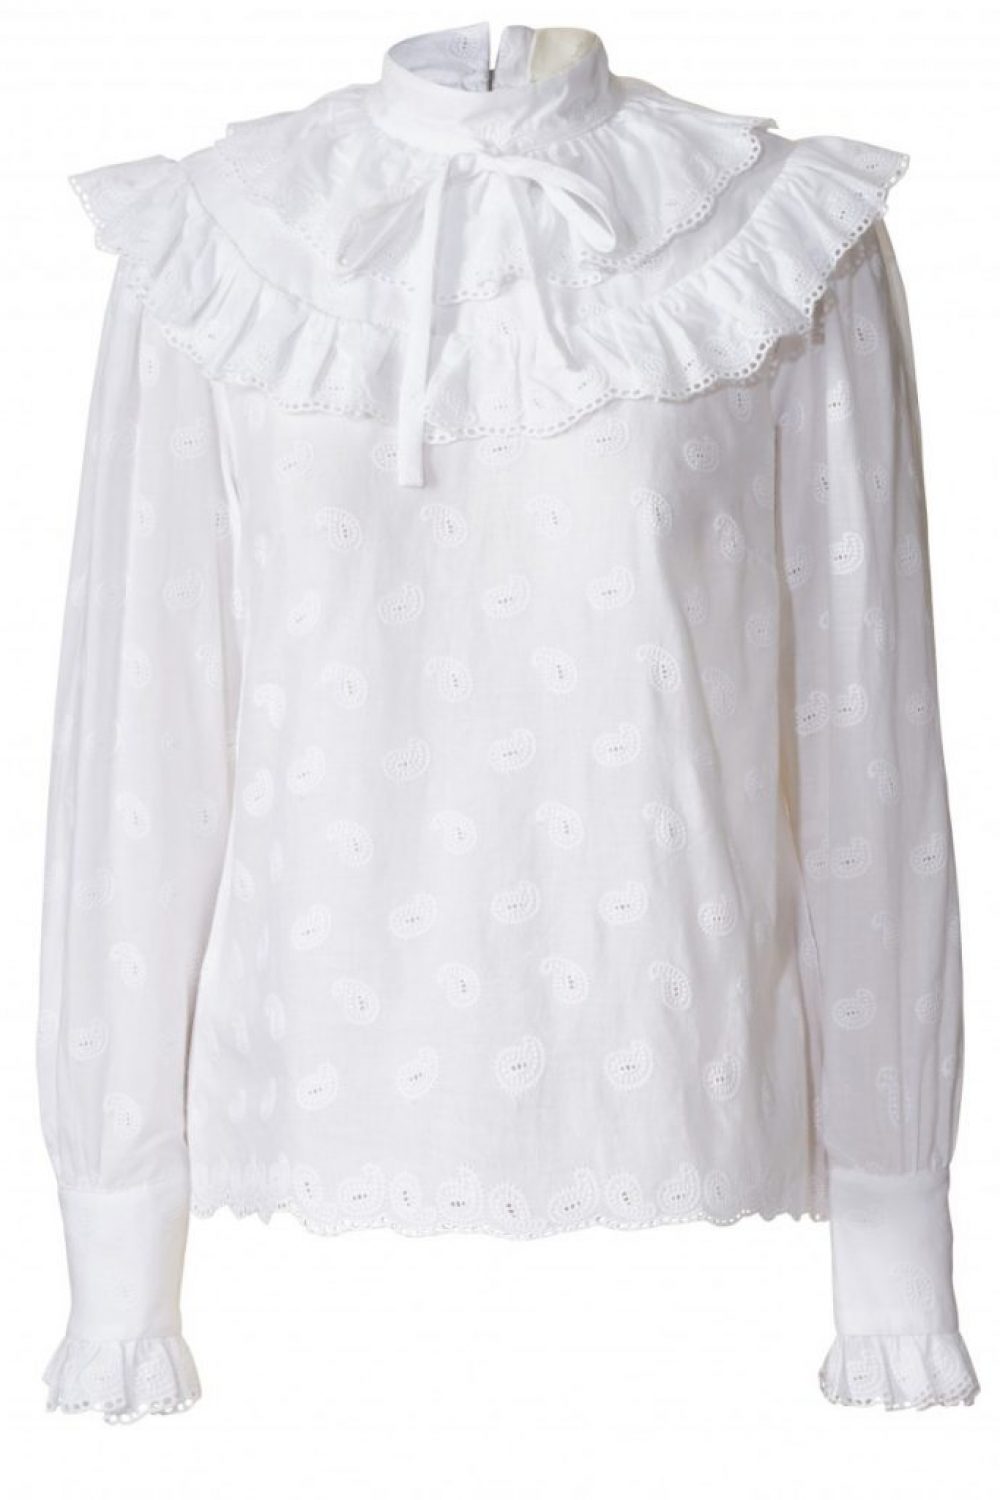 Pippa Honeymoon blouse by Orla Kiely